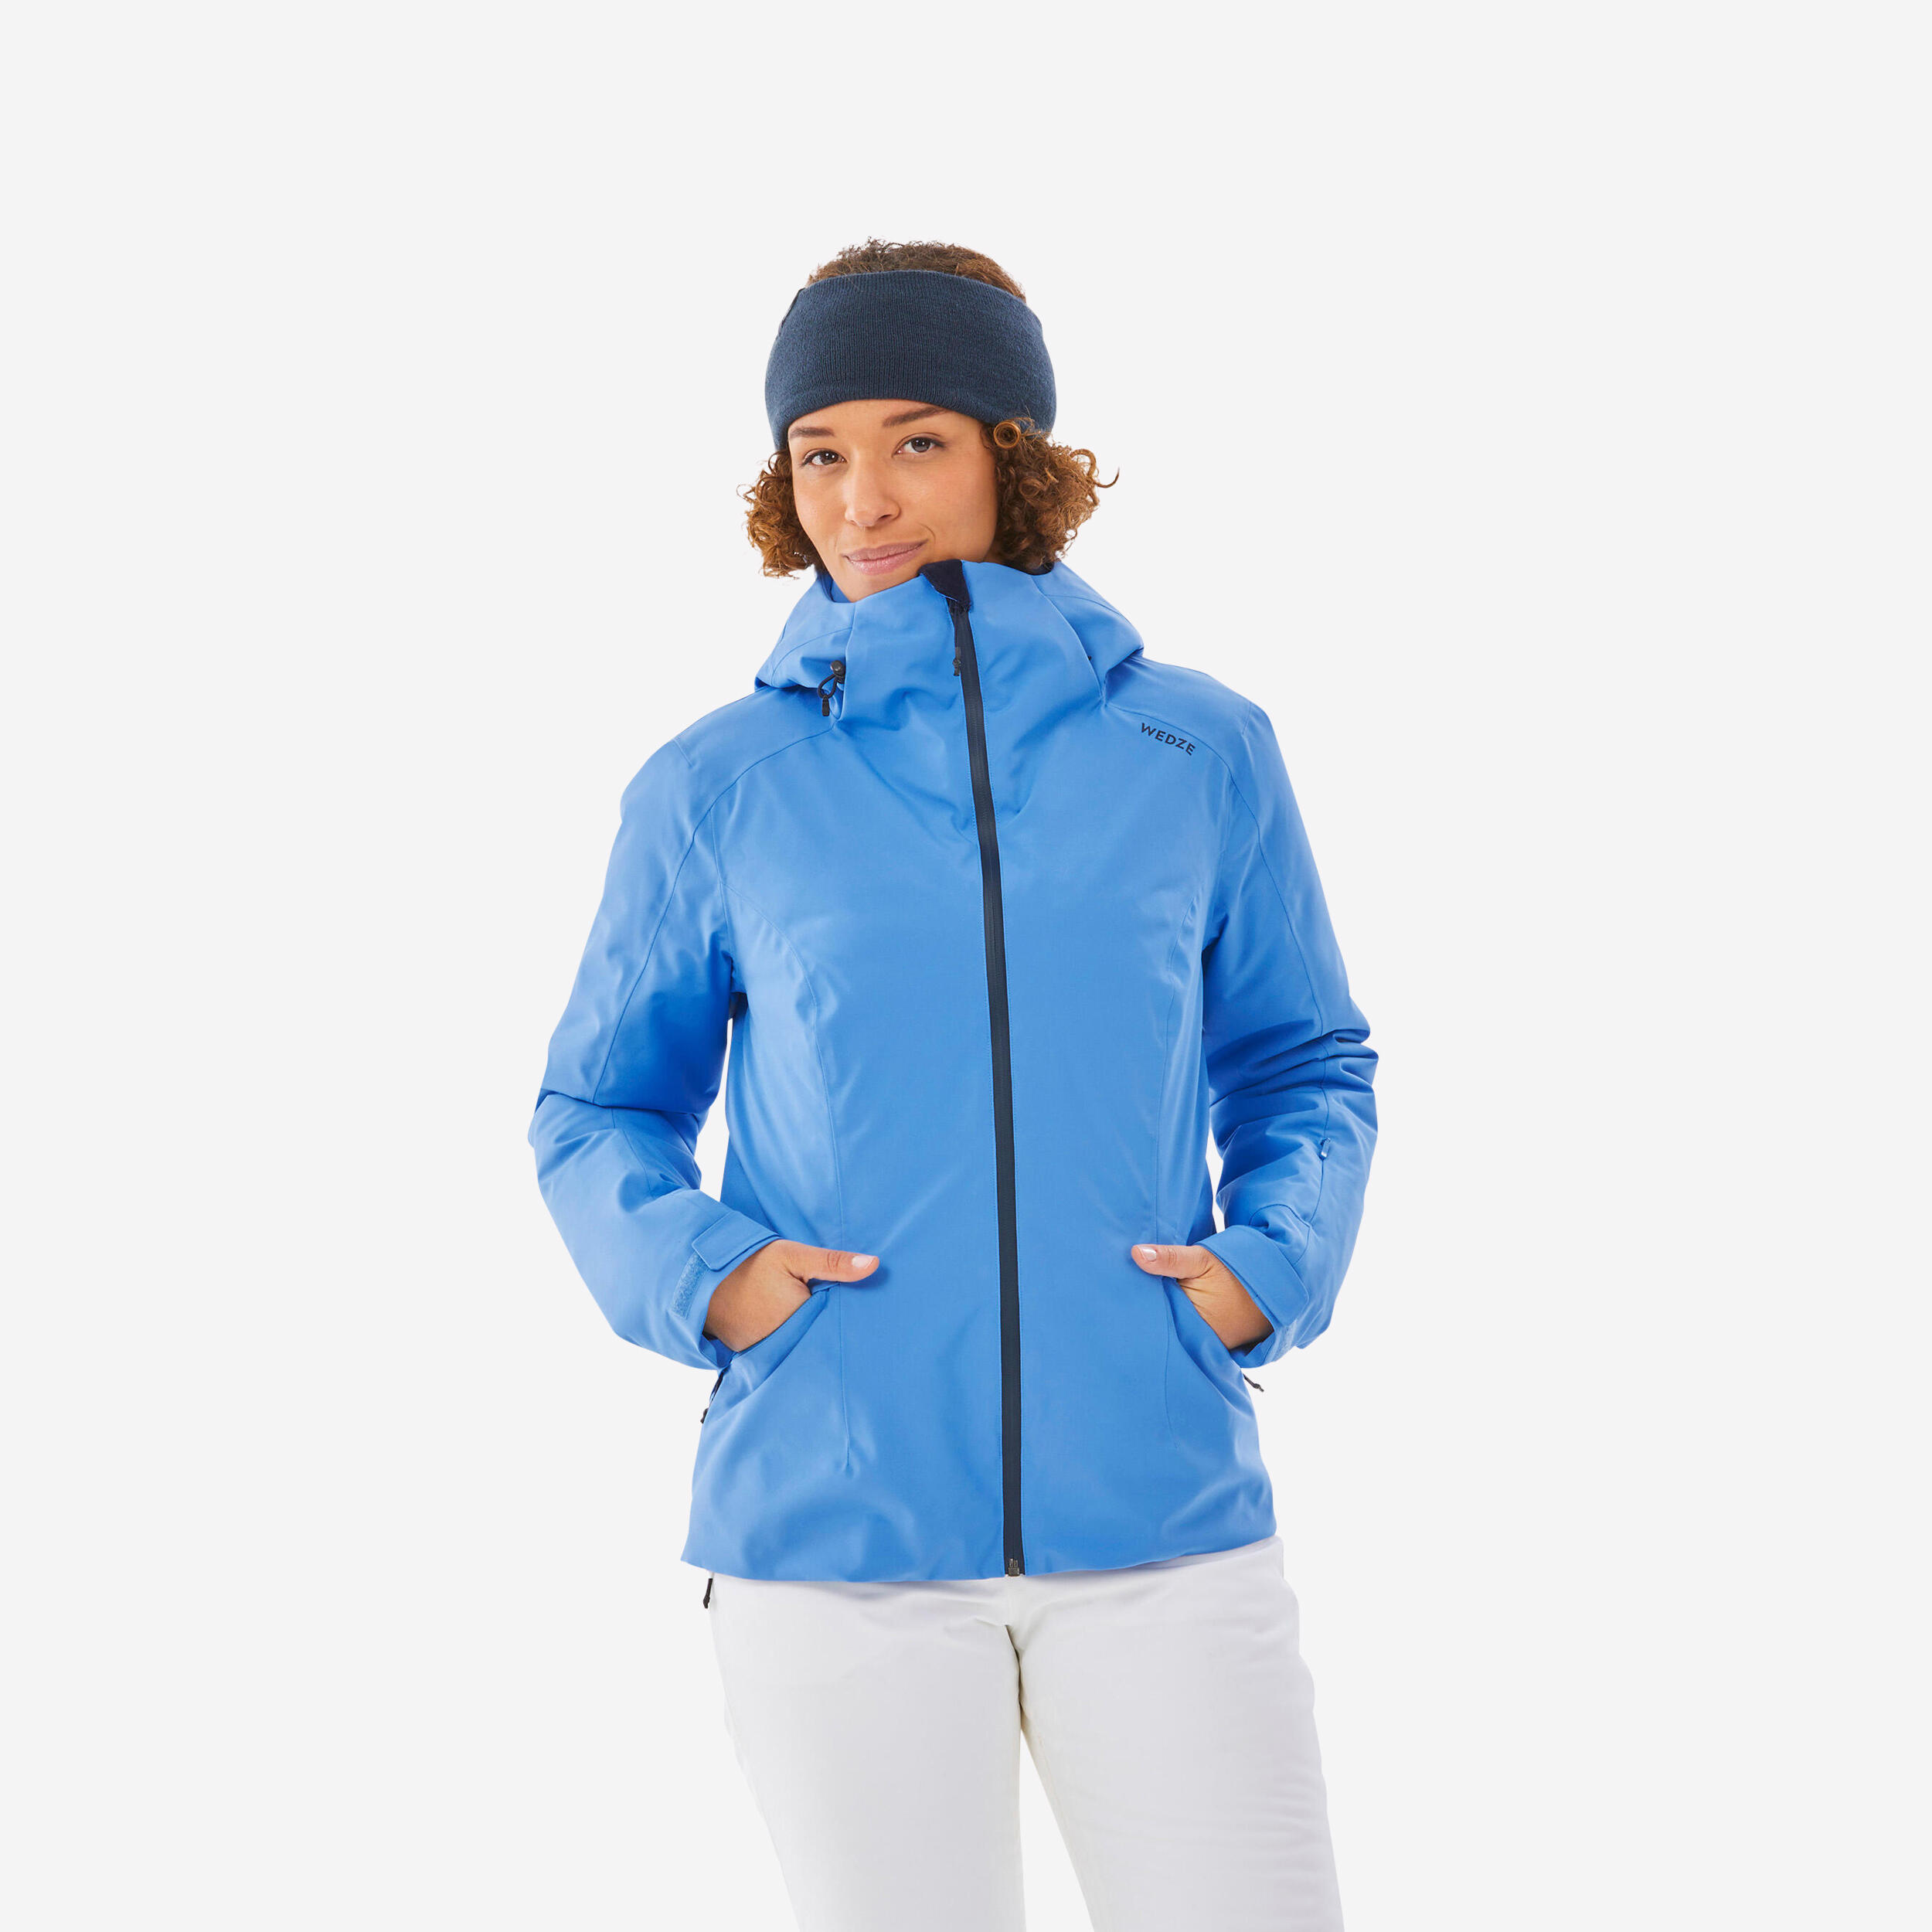 Women’s Ski Jacket - 500 - myosotis blue - Wedze - Decathlon